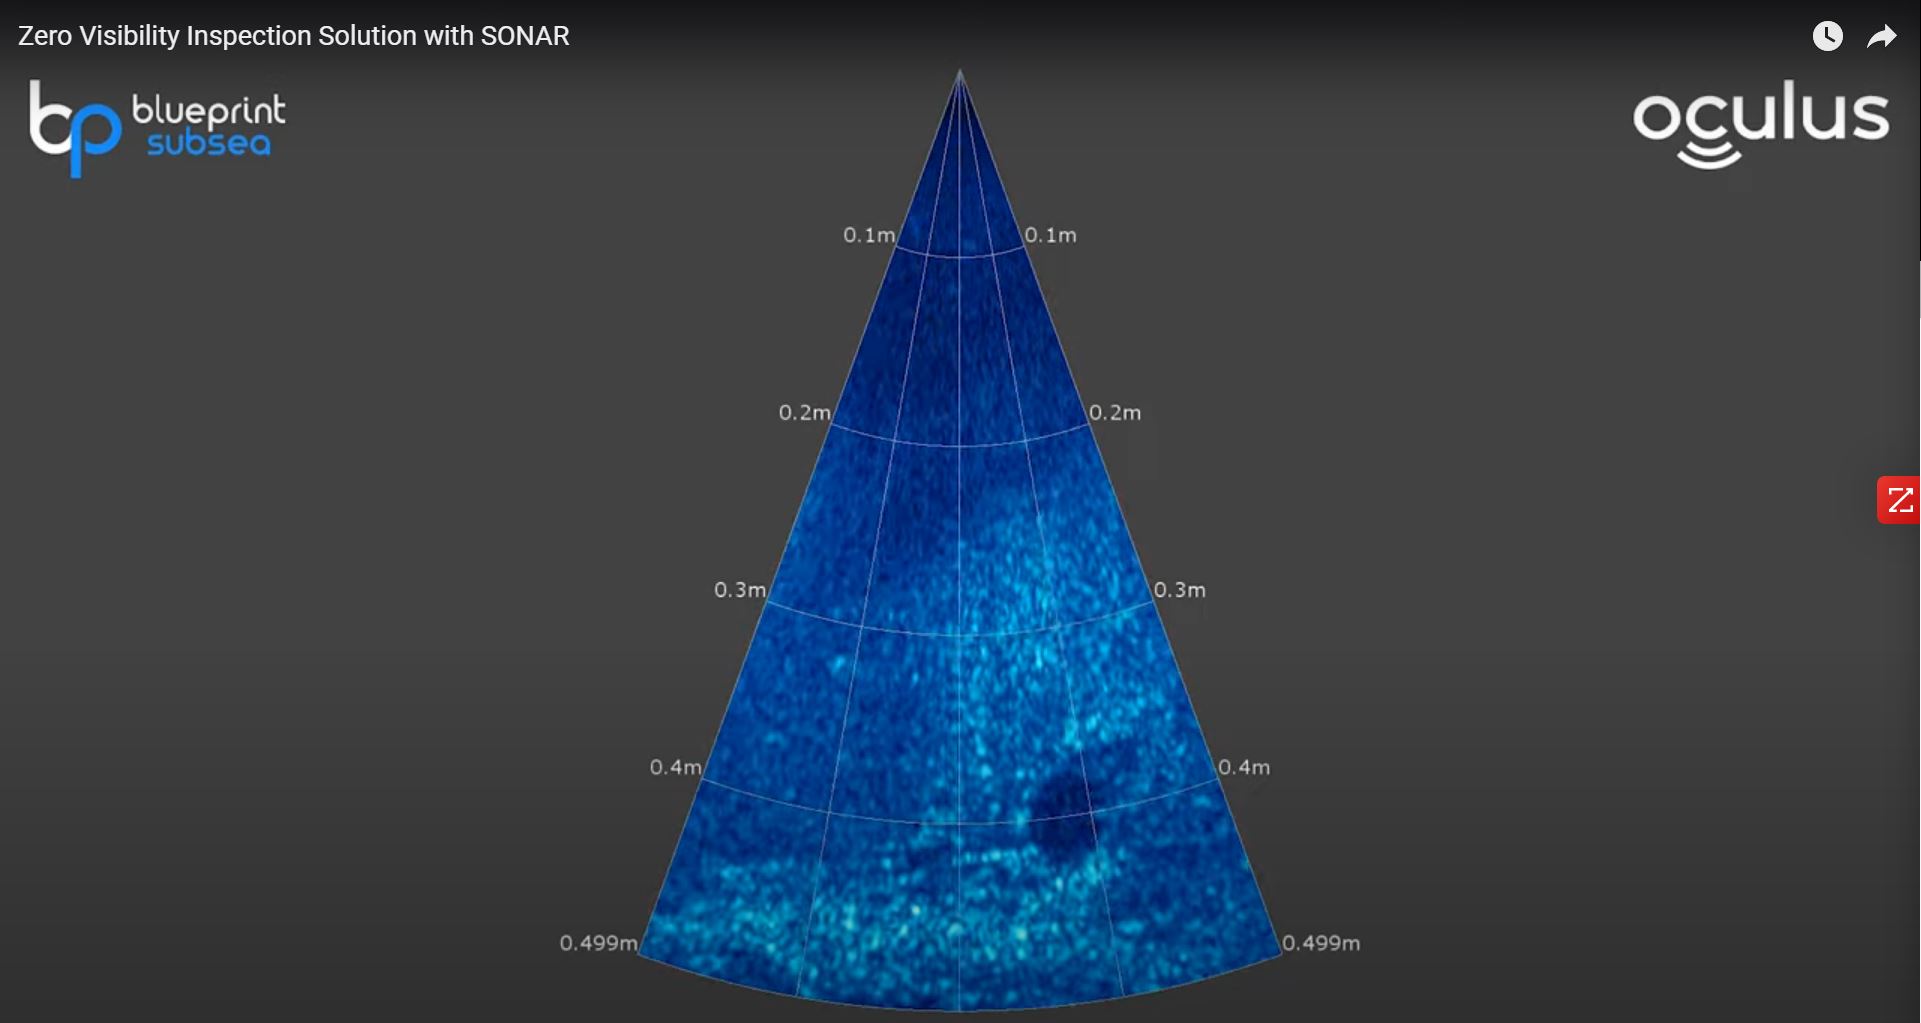 SS7 imaging sonar identifying pit size